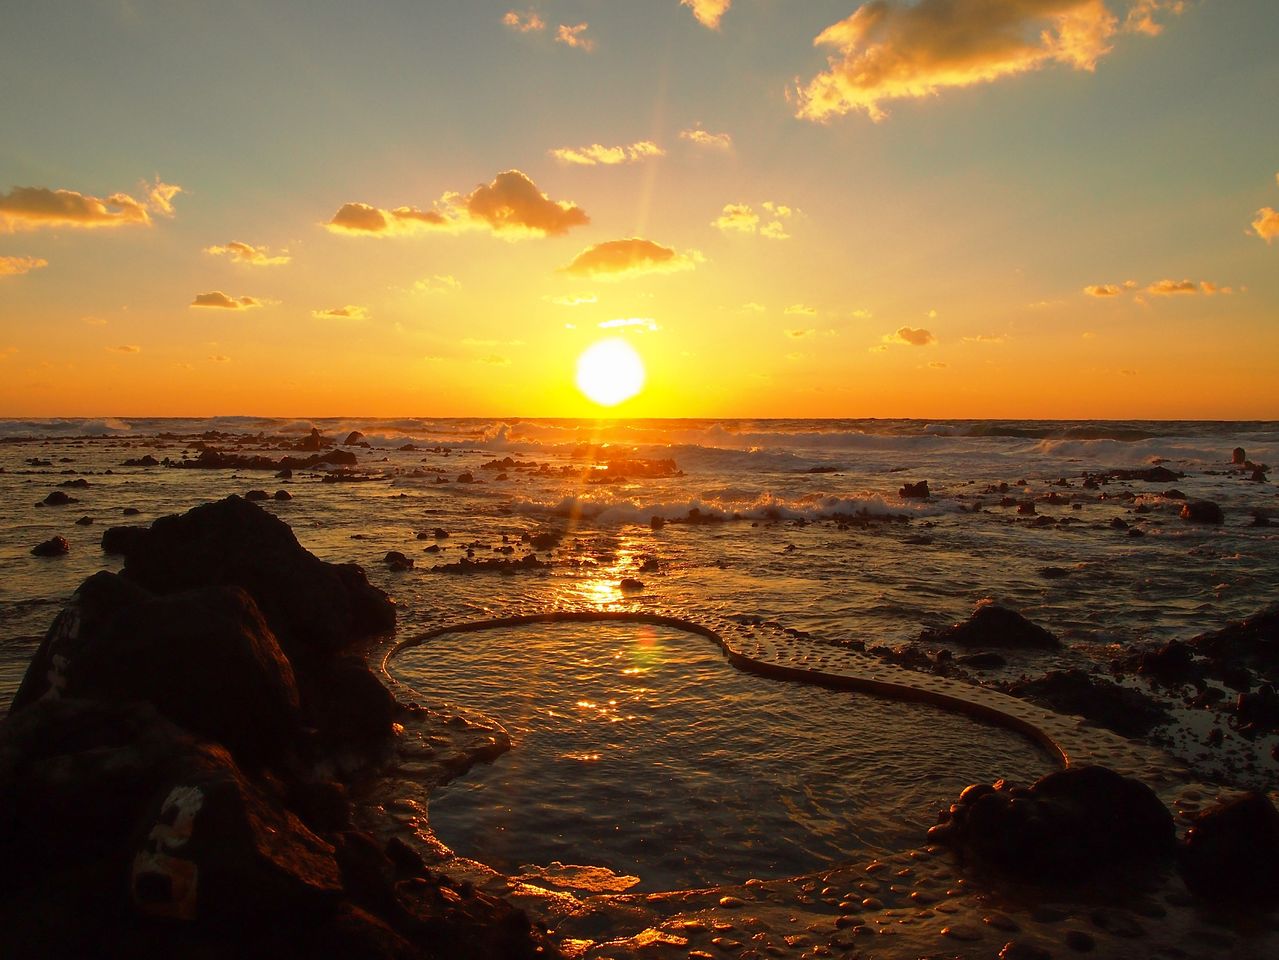 The bath waters gleam in the golden sunset. (Courtesy of the Koganezaki Furōfushi Onsen)